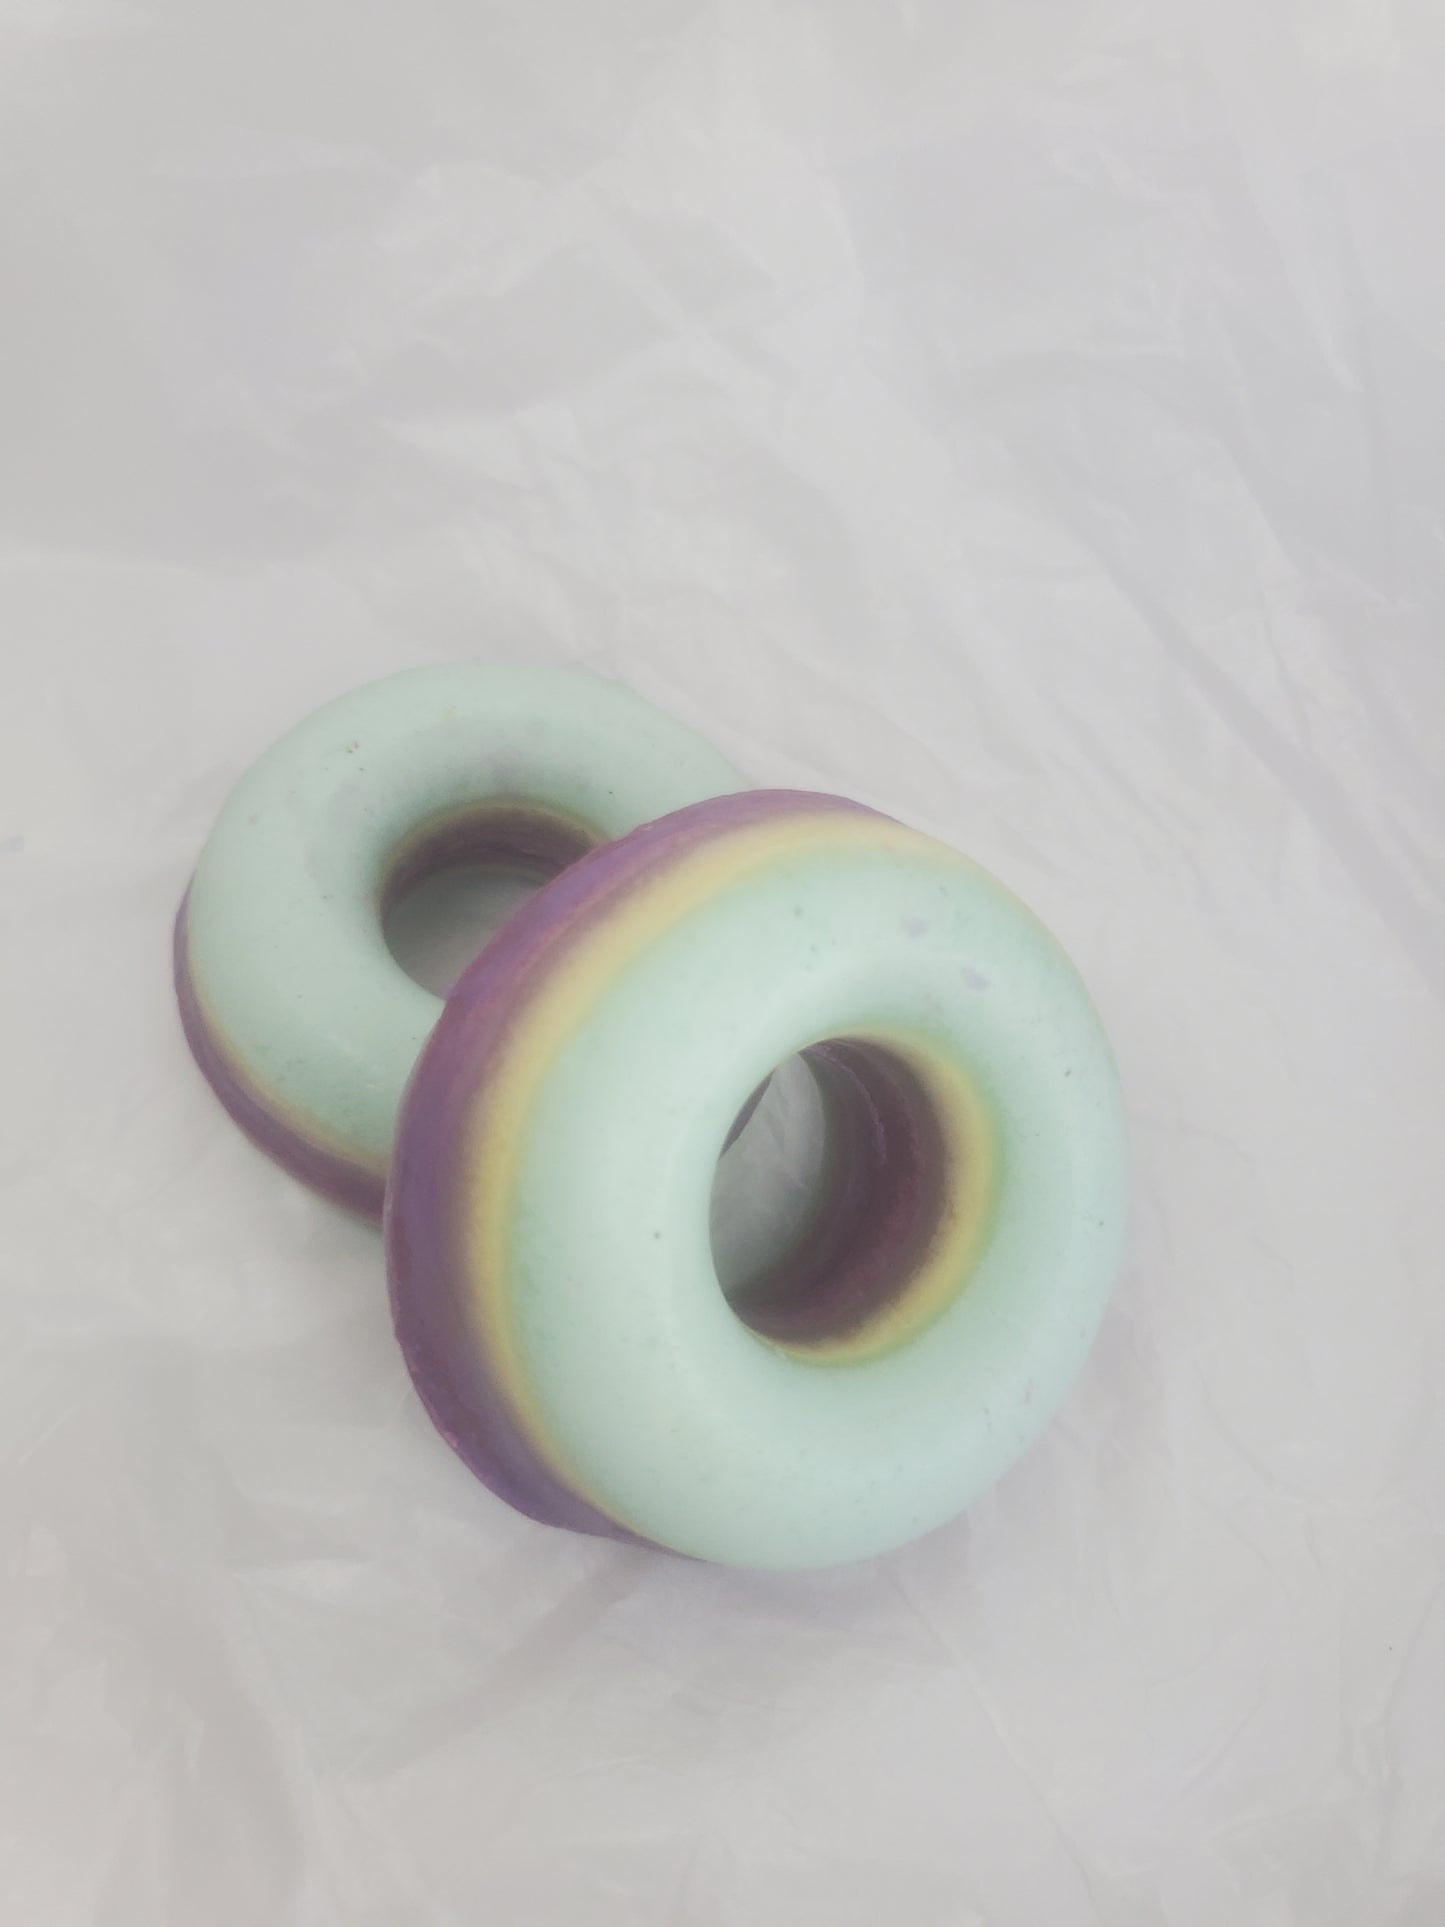 Donuts (soy sensations)